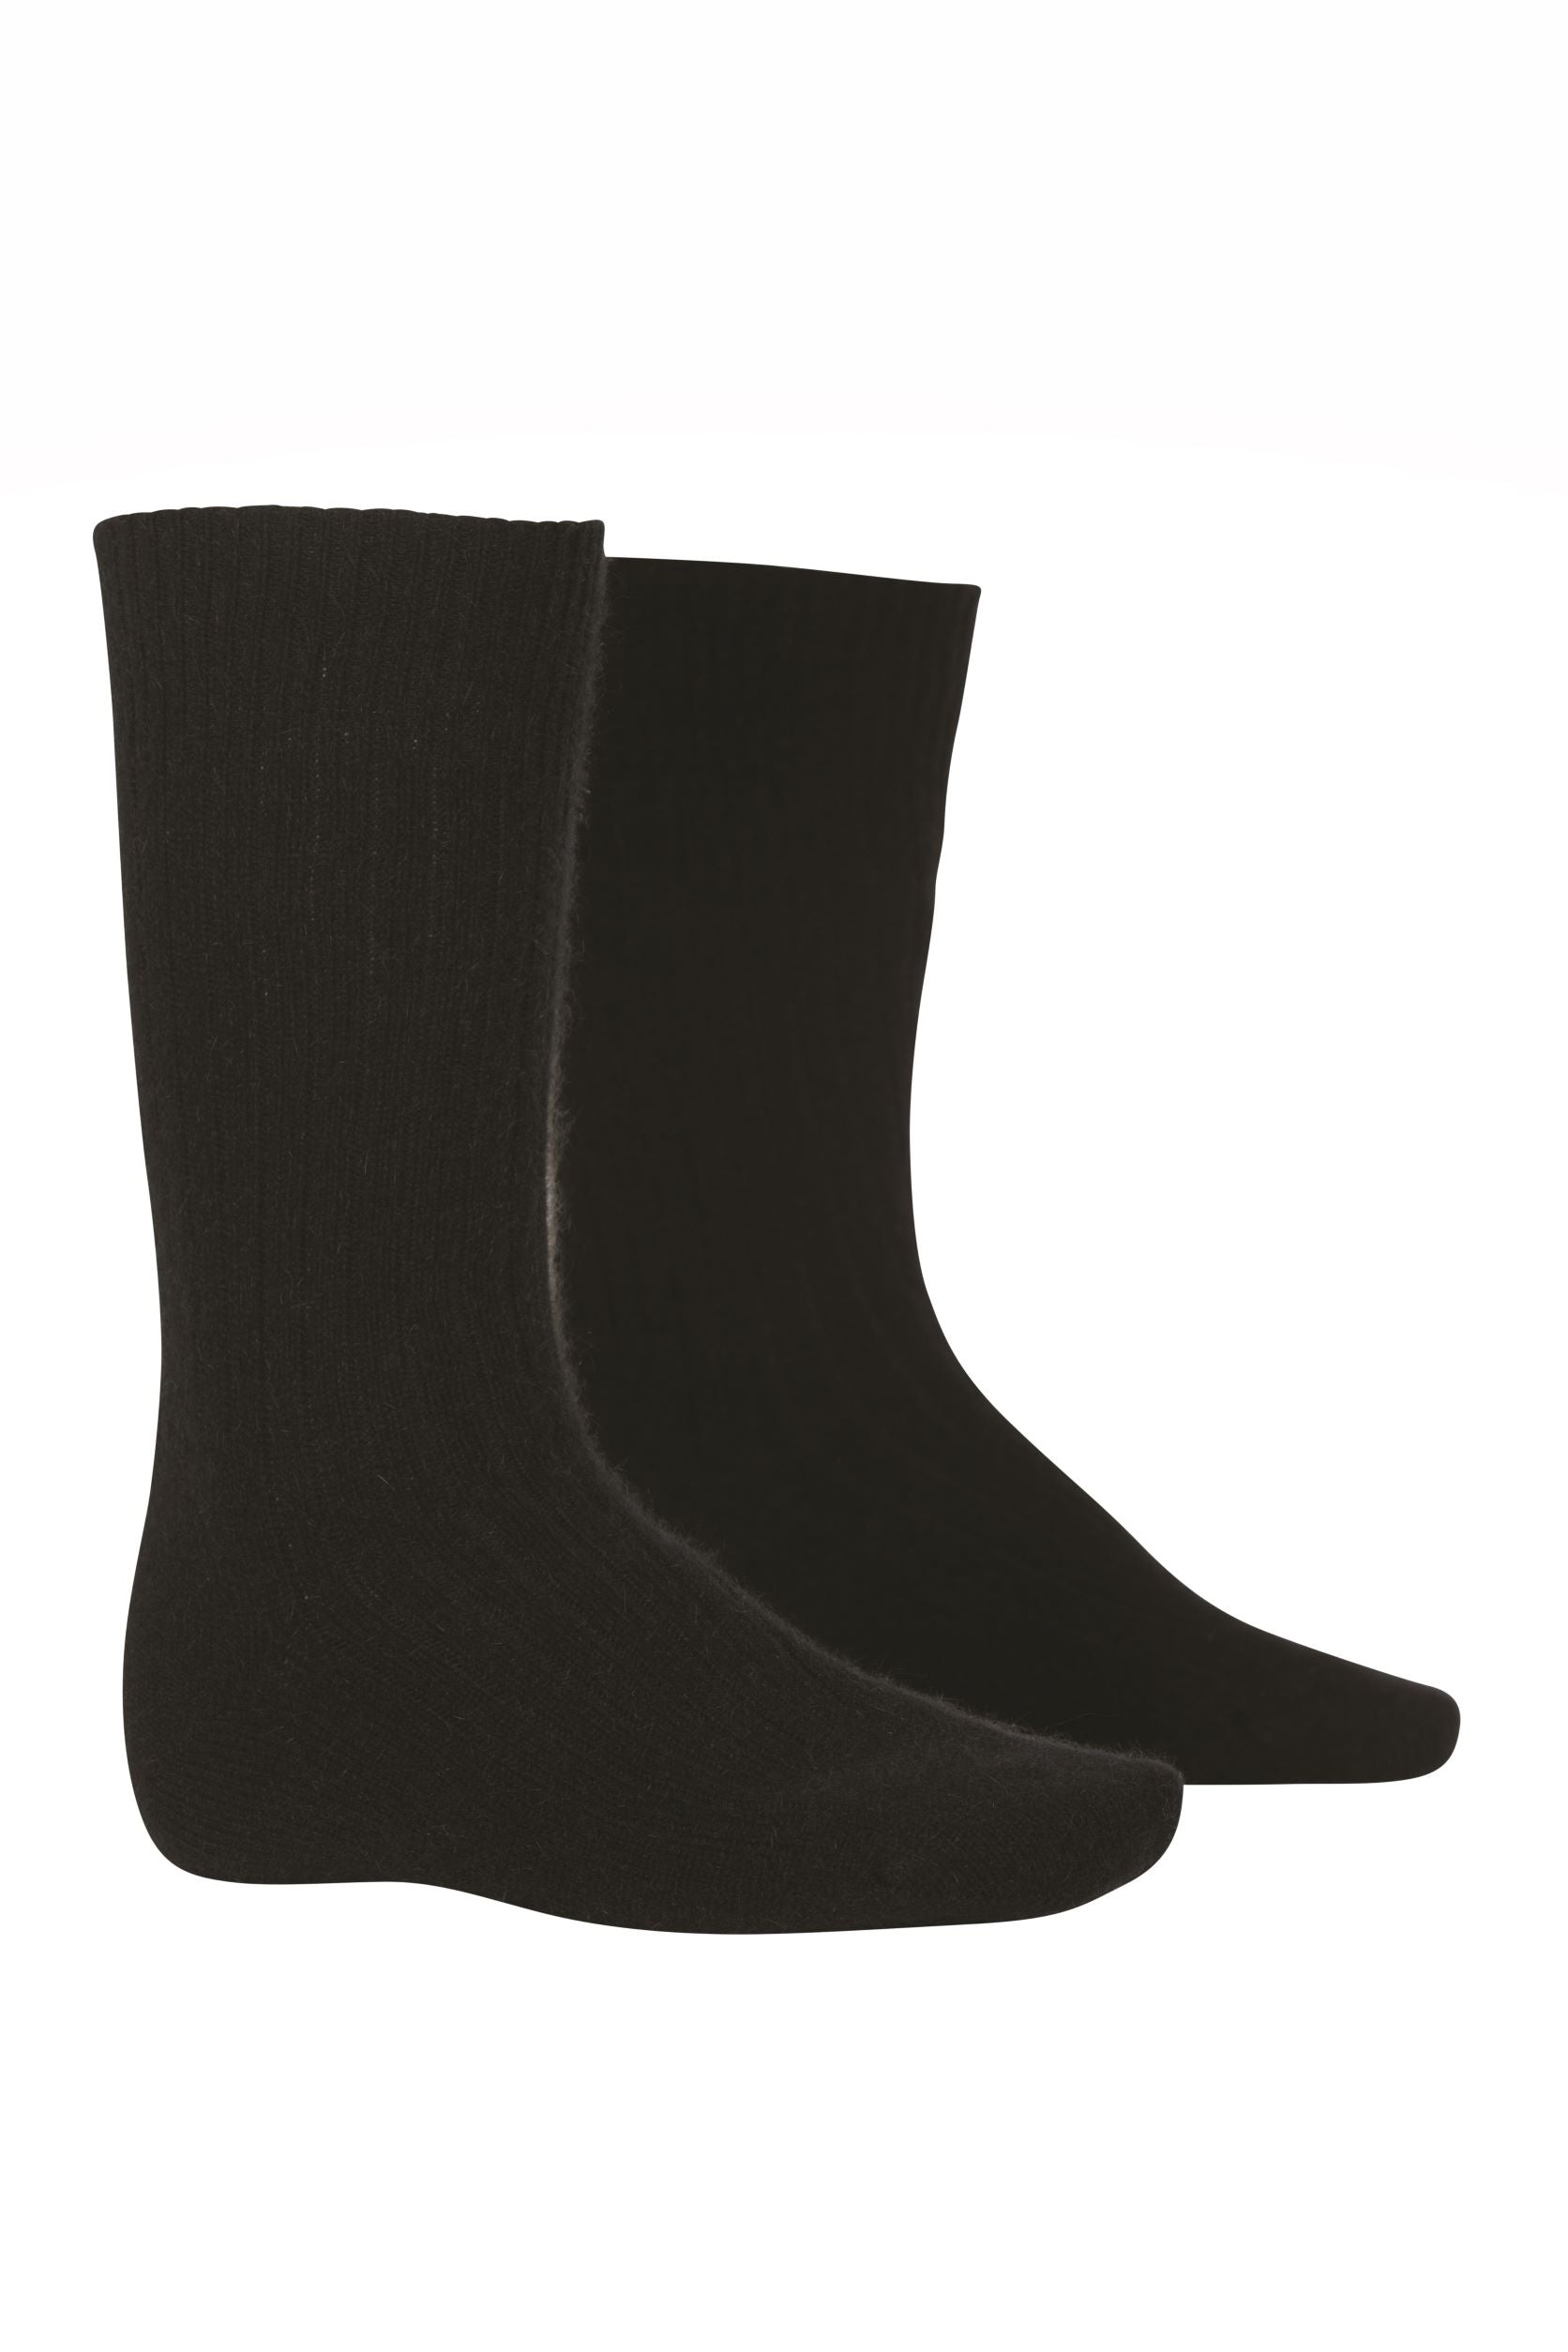 Possum Merino Unisex Socks - MKM Knitwear